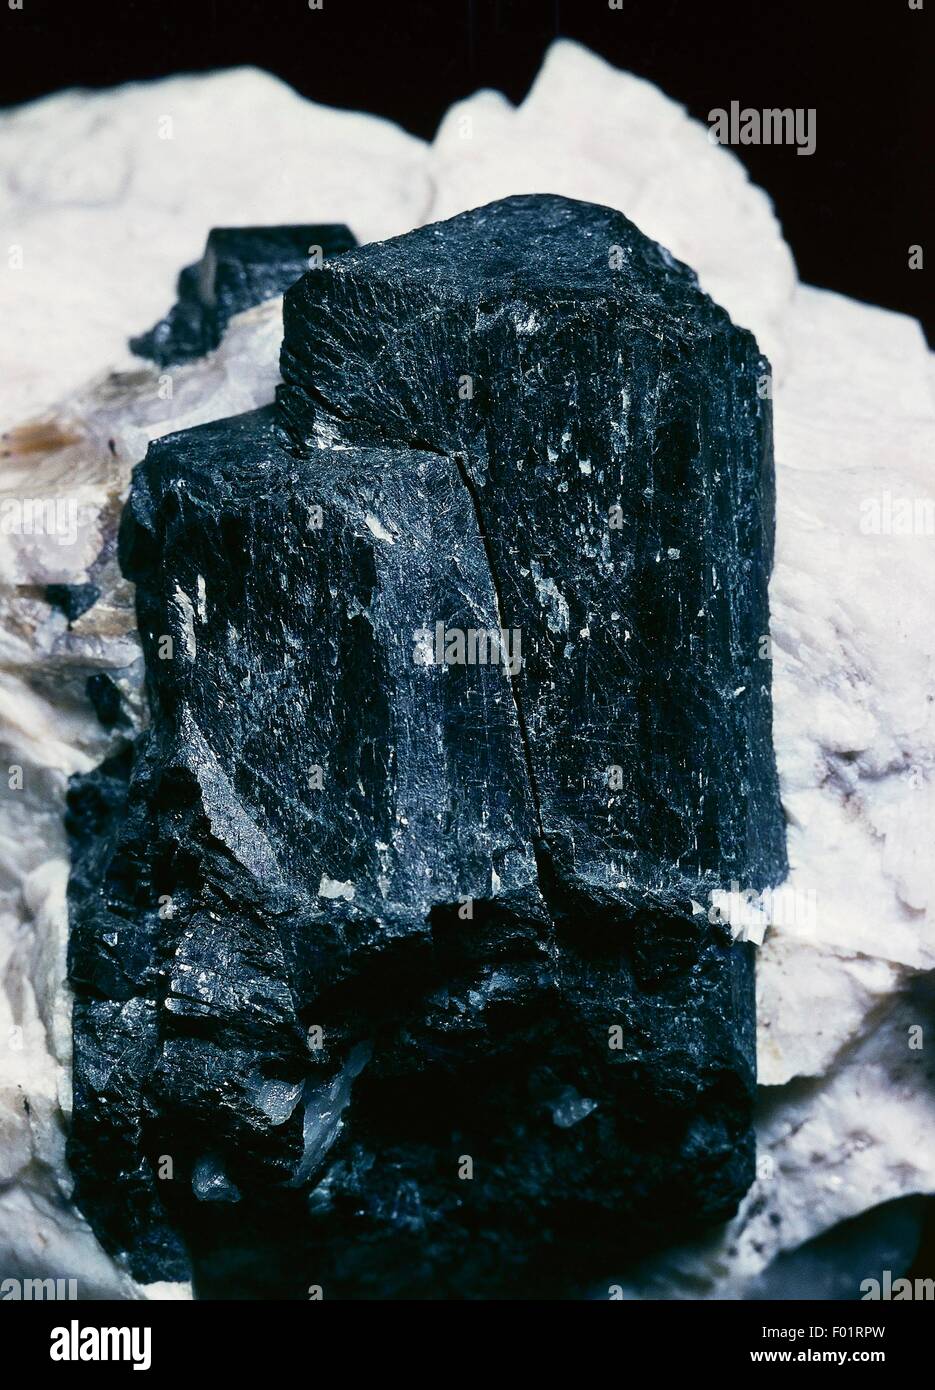 Tormalina nera, silicato, in Pegmatite, invadente rock, da Olgiasca, Lombardia, Italia. Foto Stock